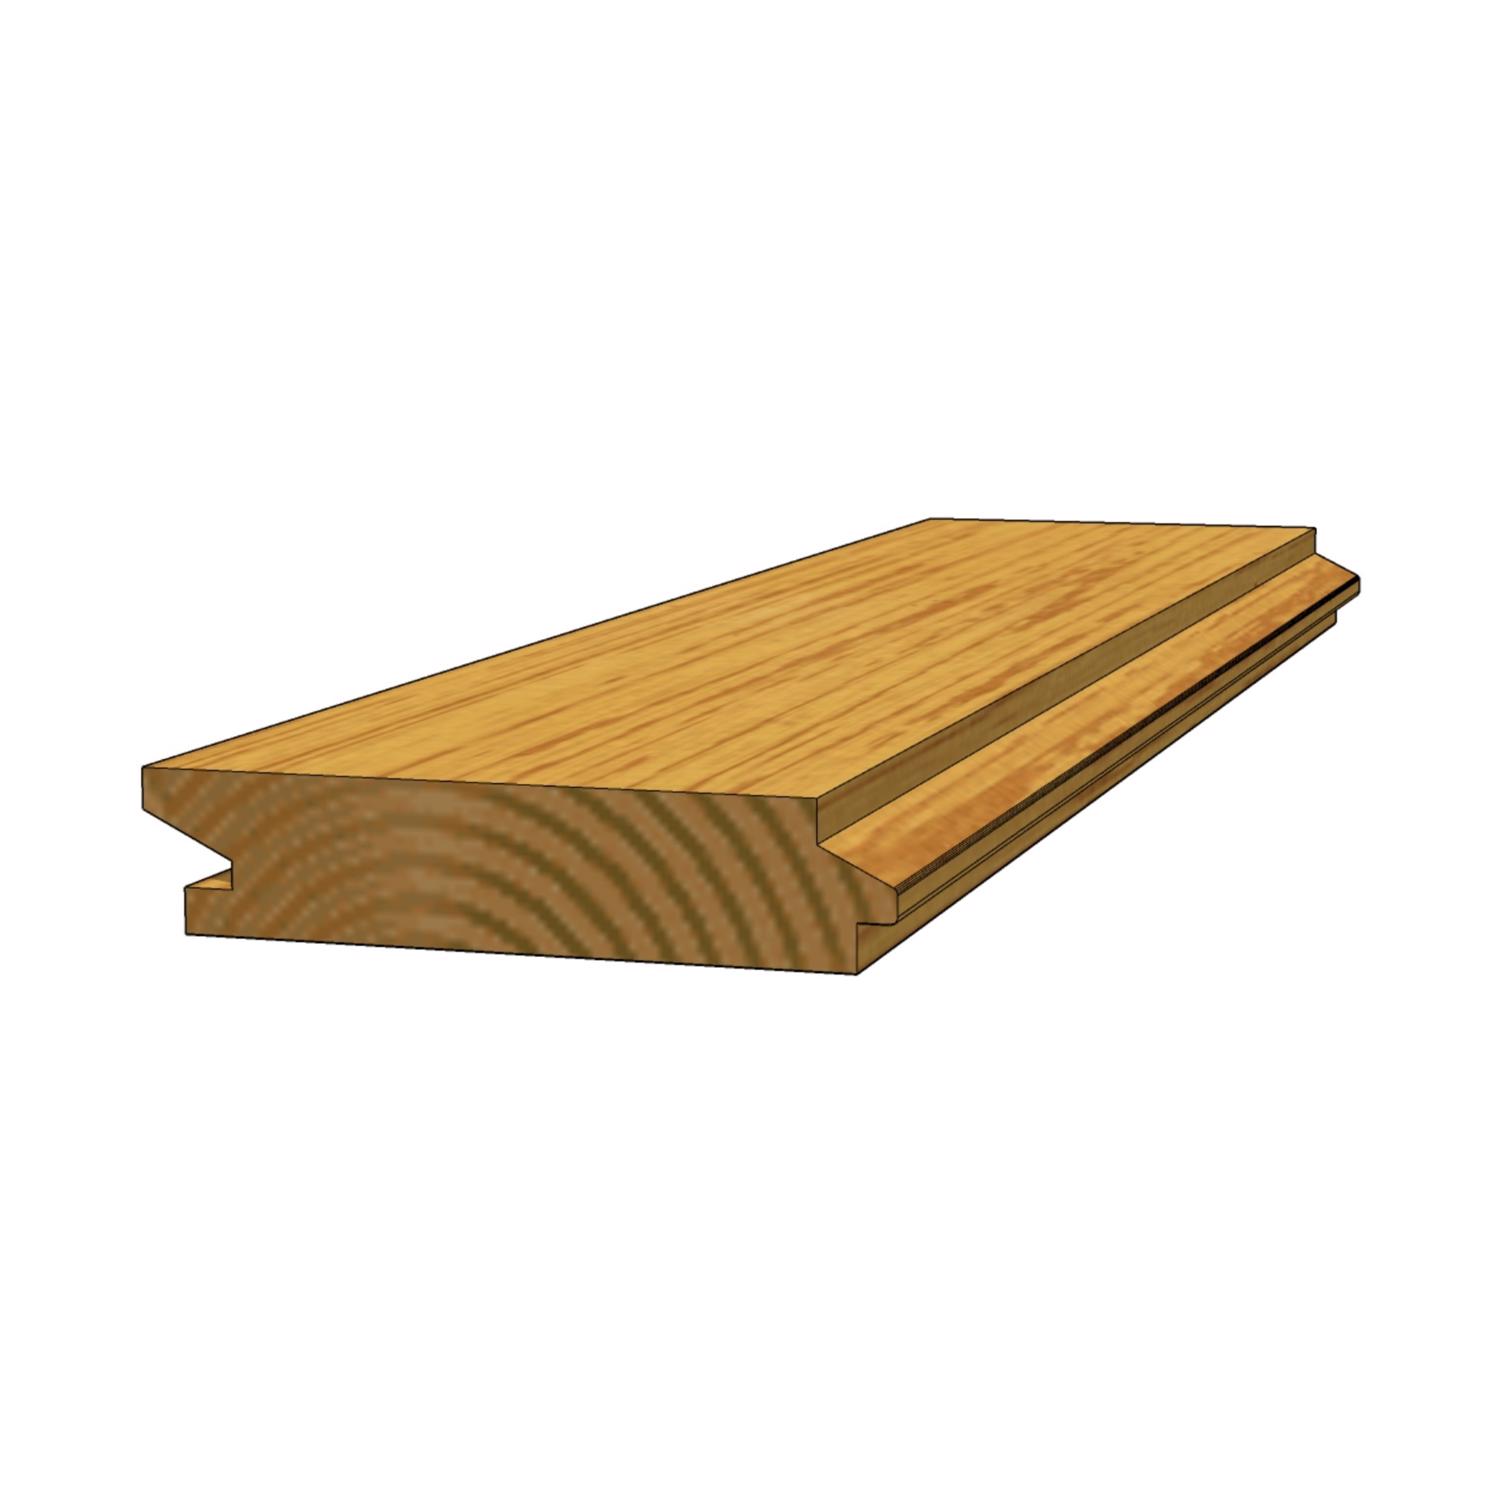 Solid Oak flooring - Rustic grade, Smooth, Untreated - 205 x 21 mm